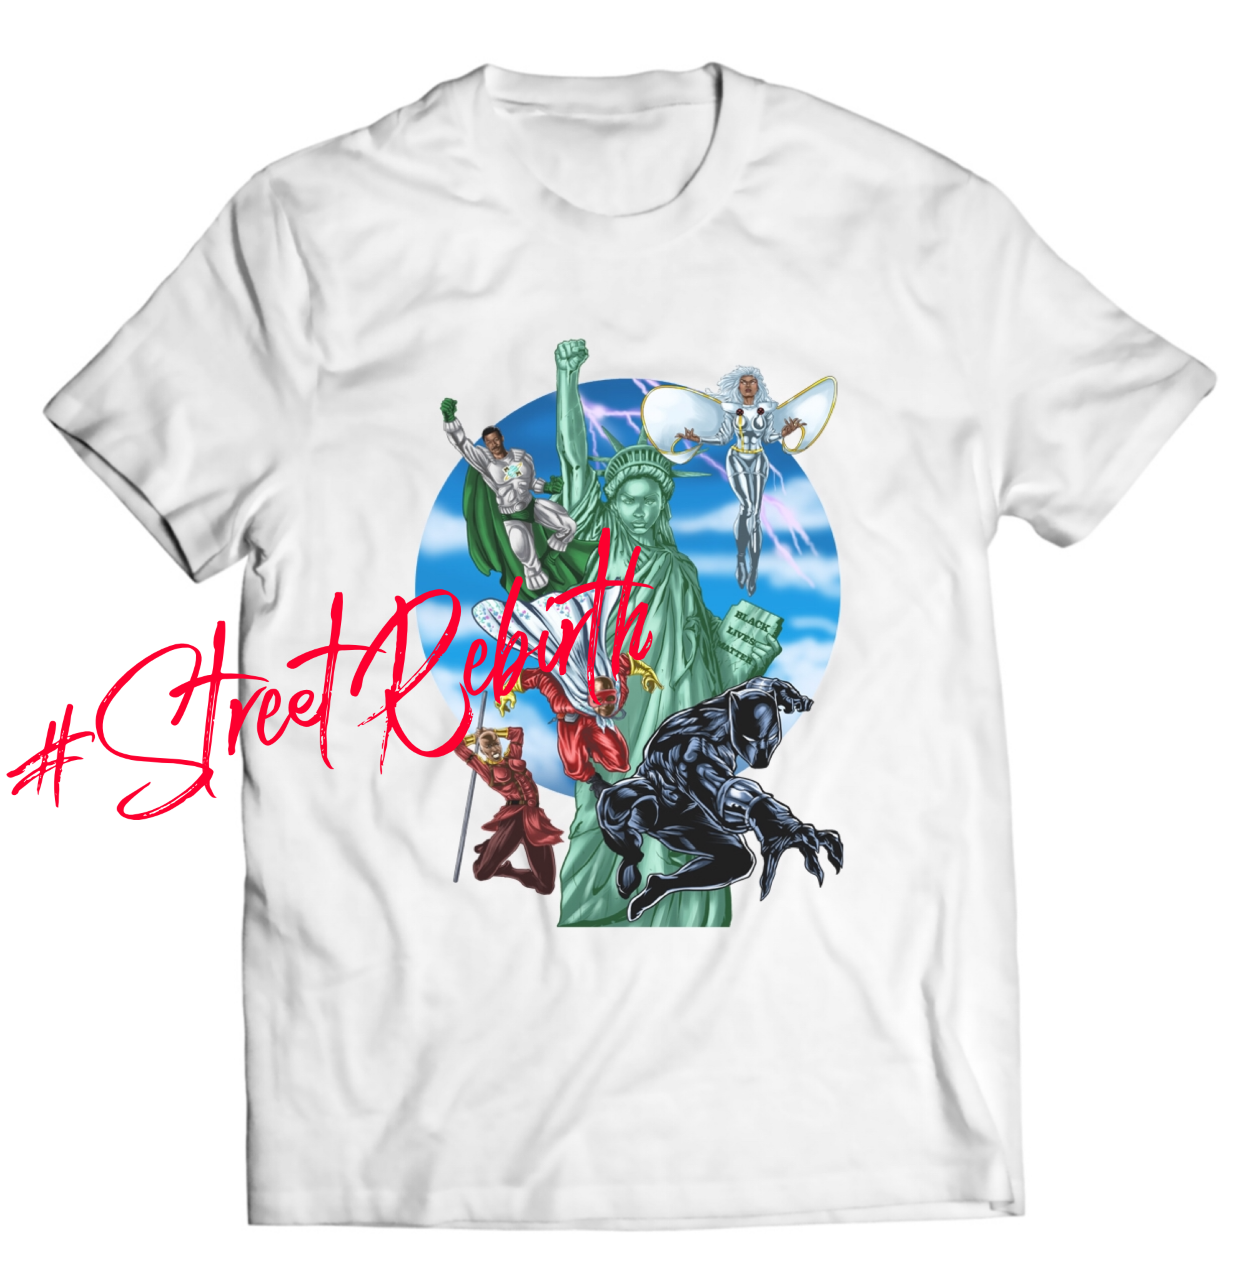 Black Lives Matter Super Heros Shirt - Direct To Garment Quality Print - Unisex Shirt - Gift For Him or Her